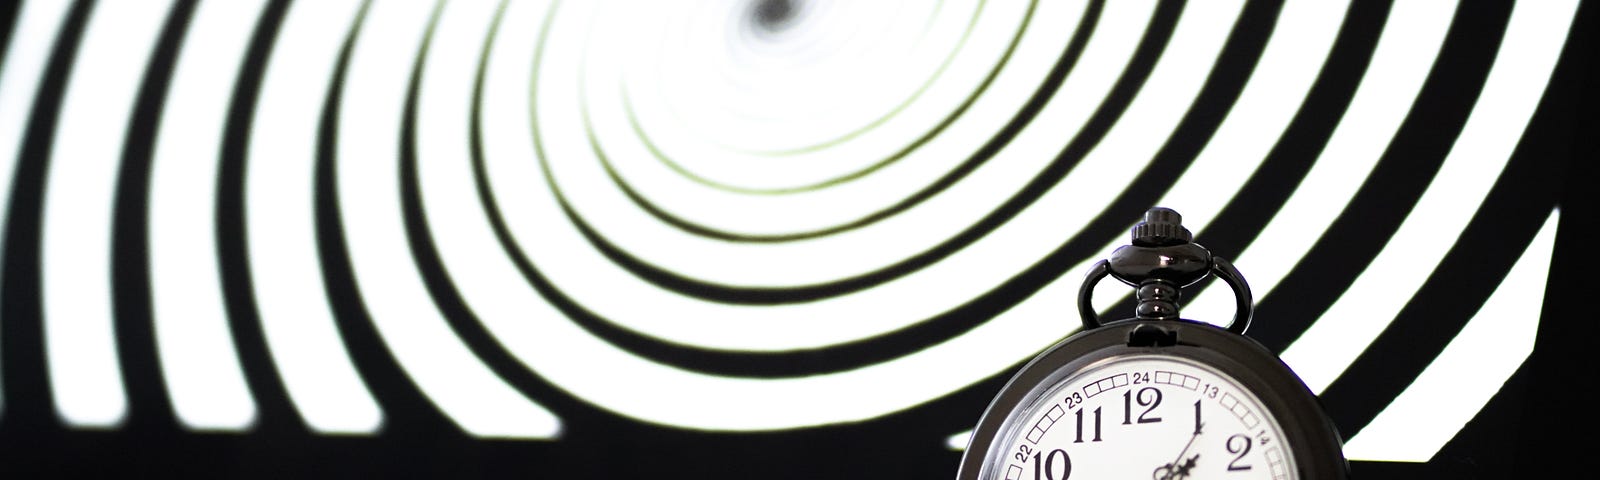 pocketwatch with spiral pattern in background